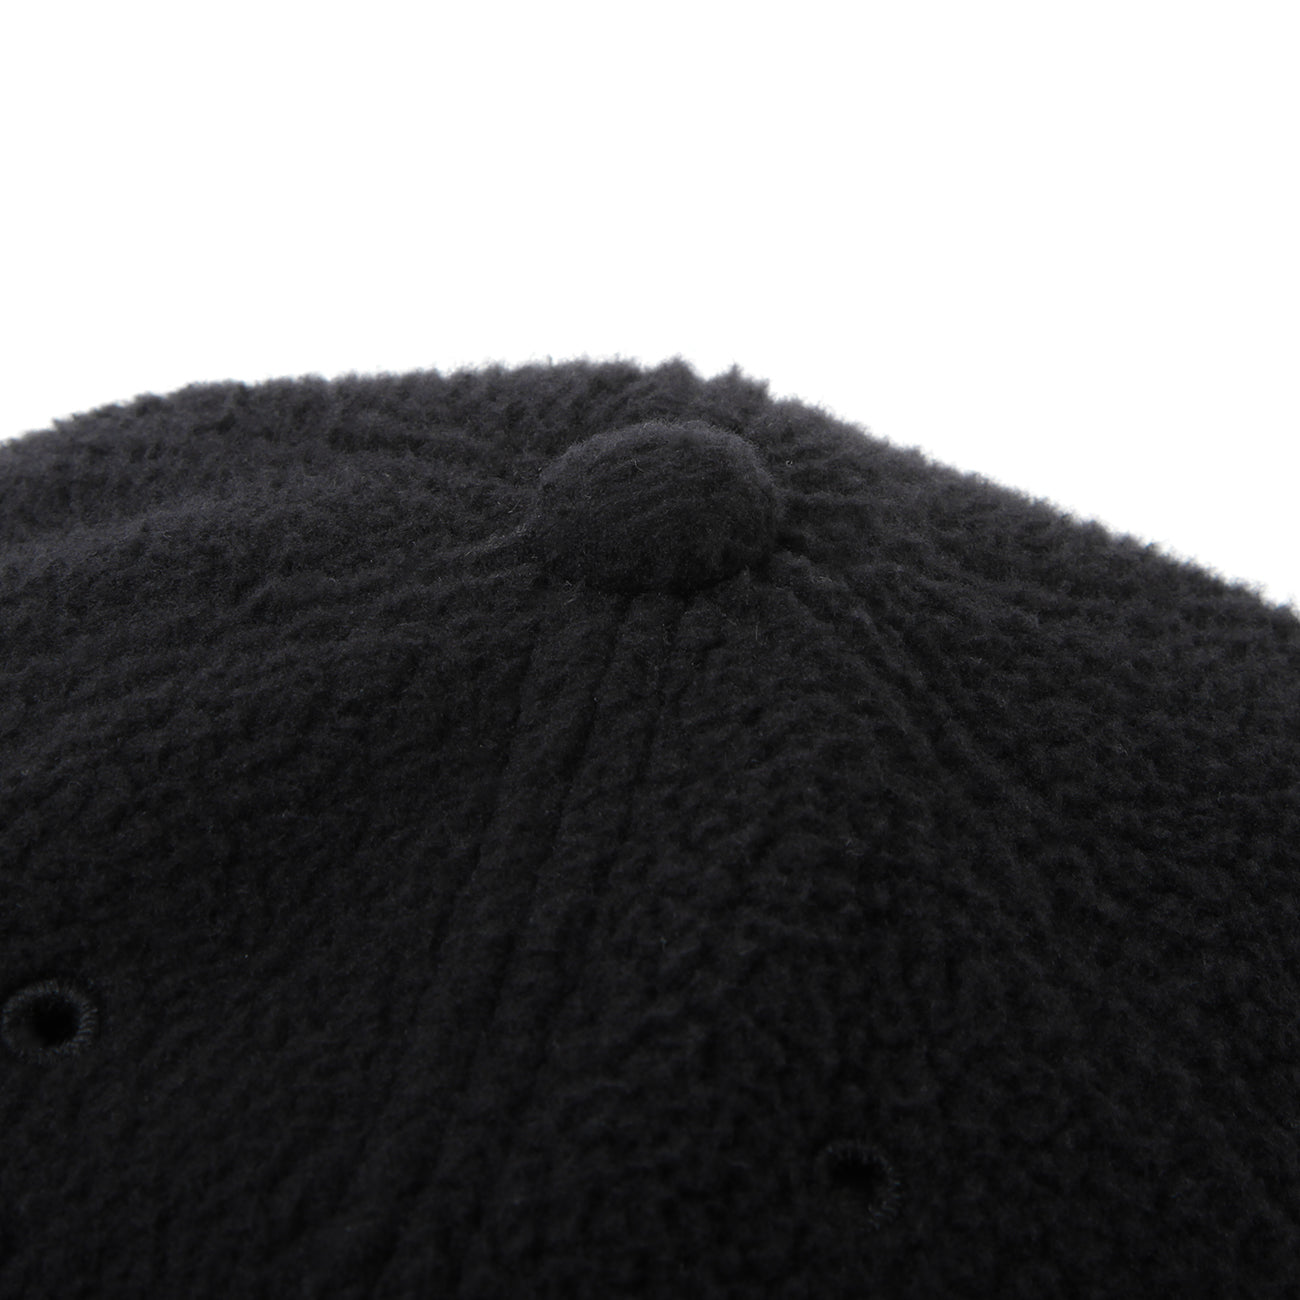 KED CAP (THERMAL PRO) - BLACK